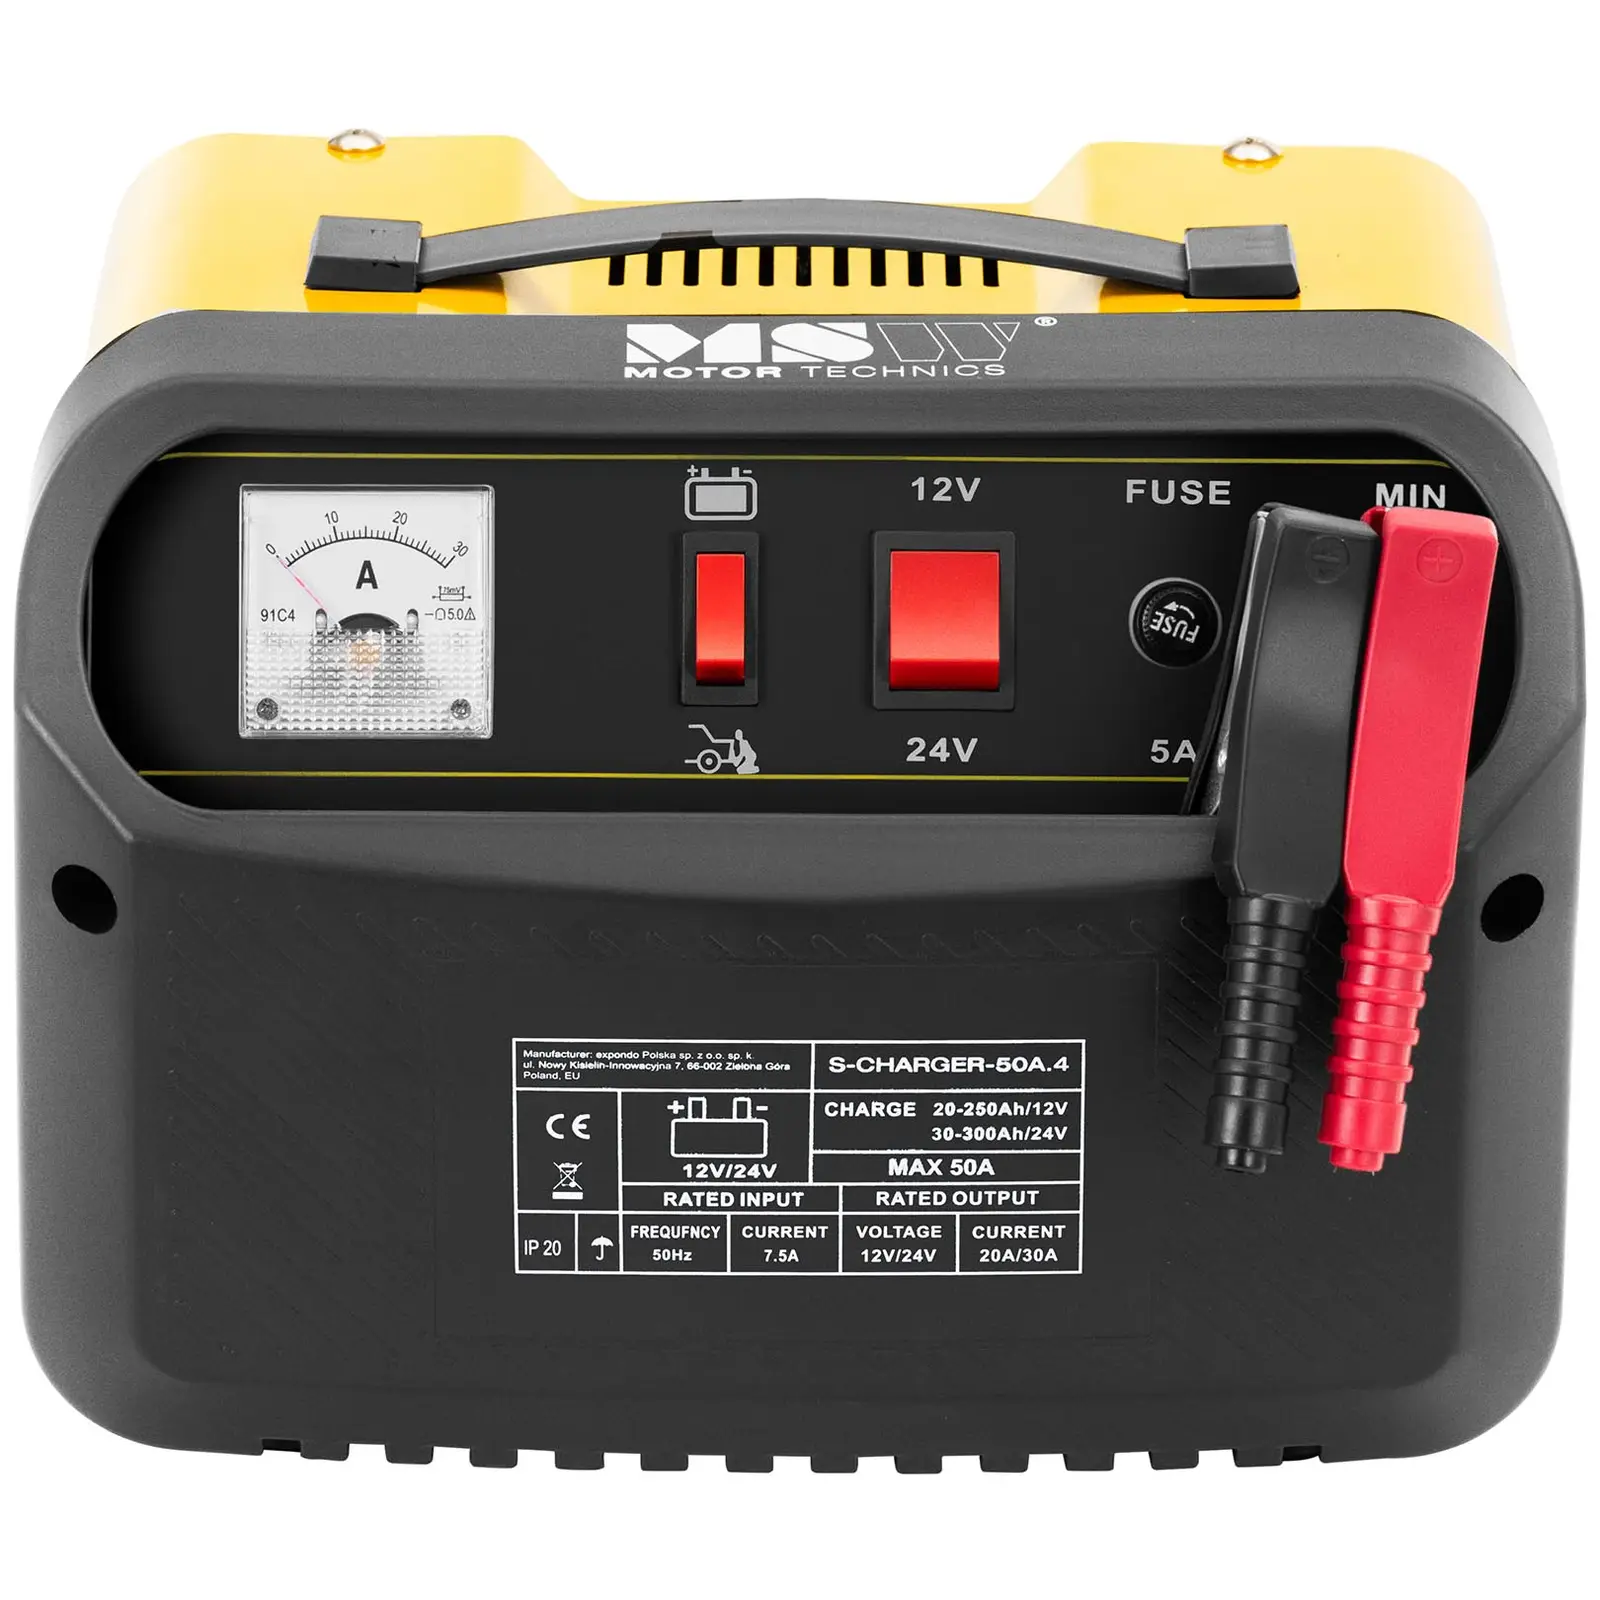 Autobatterie-Ladegerät - Starthilfe - 12 / 24 V - 45 A